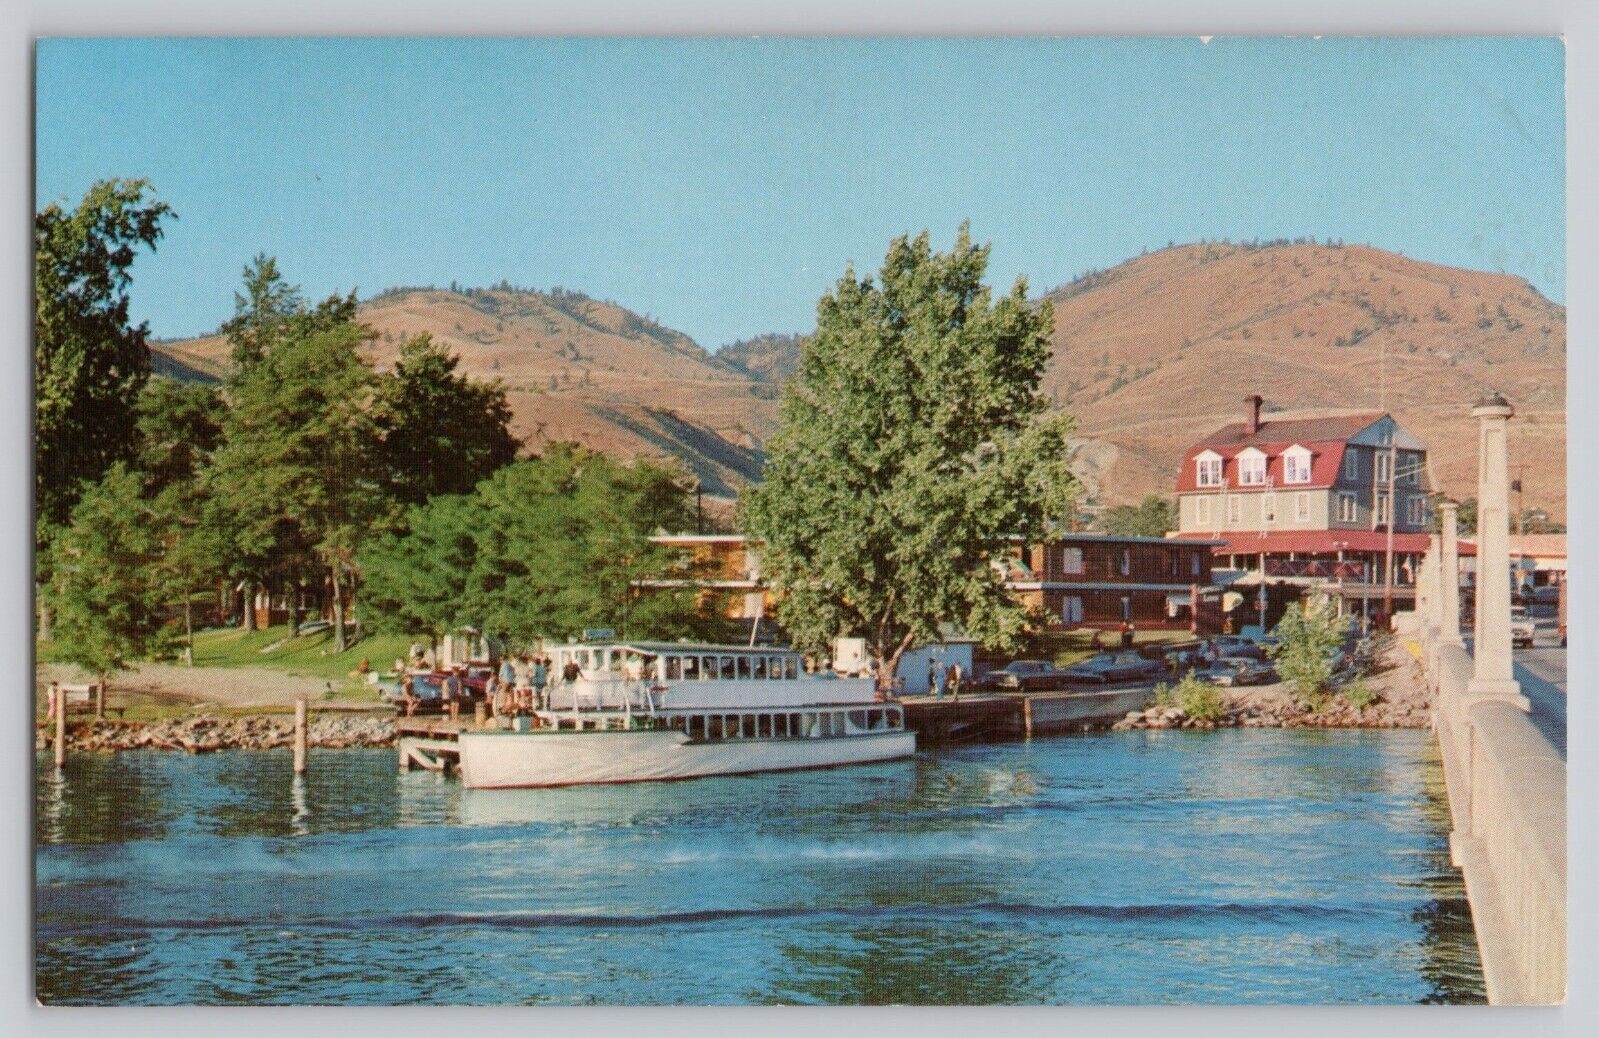 Campbell's Resort Chelan Lake Washington Boat Ferry Postcard